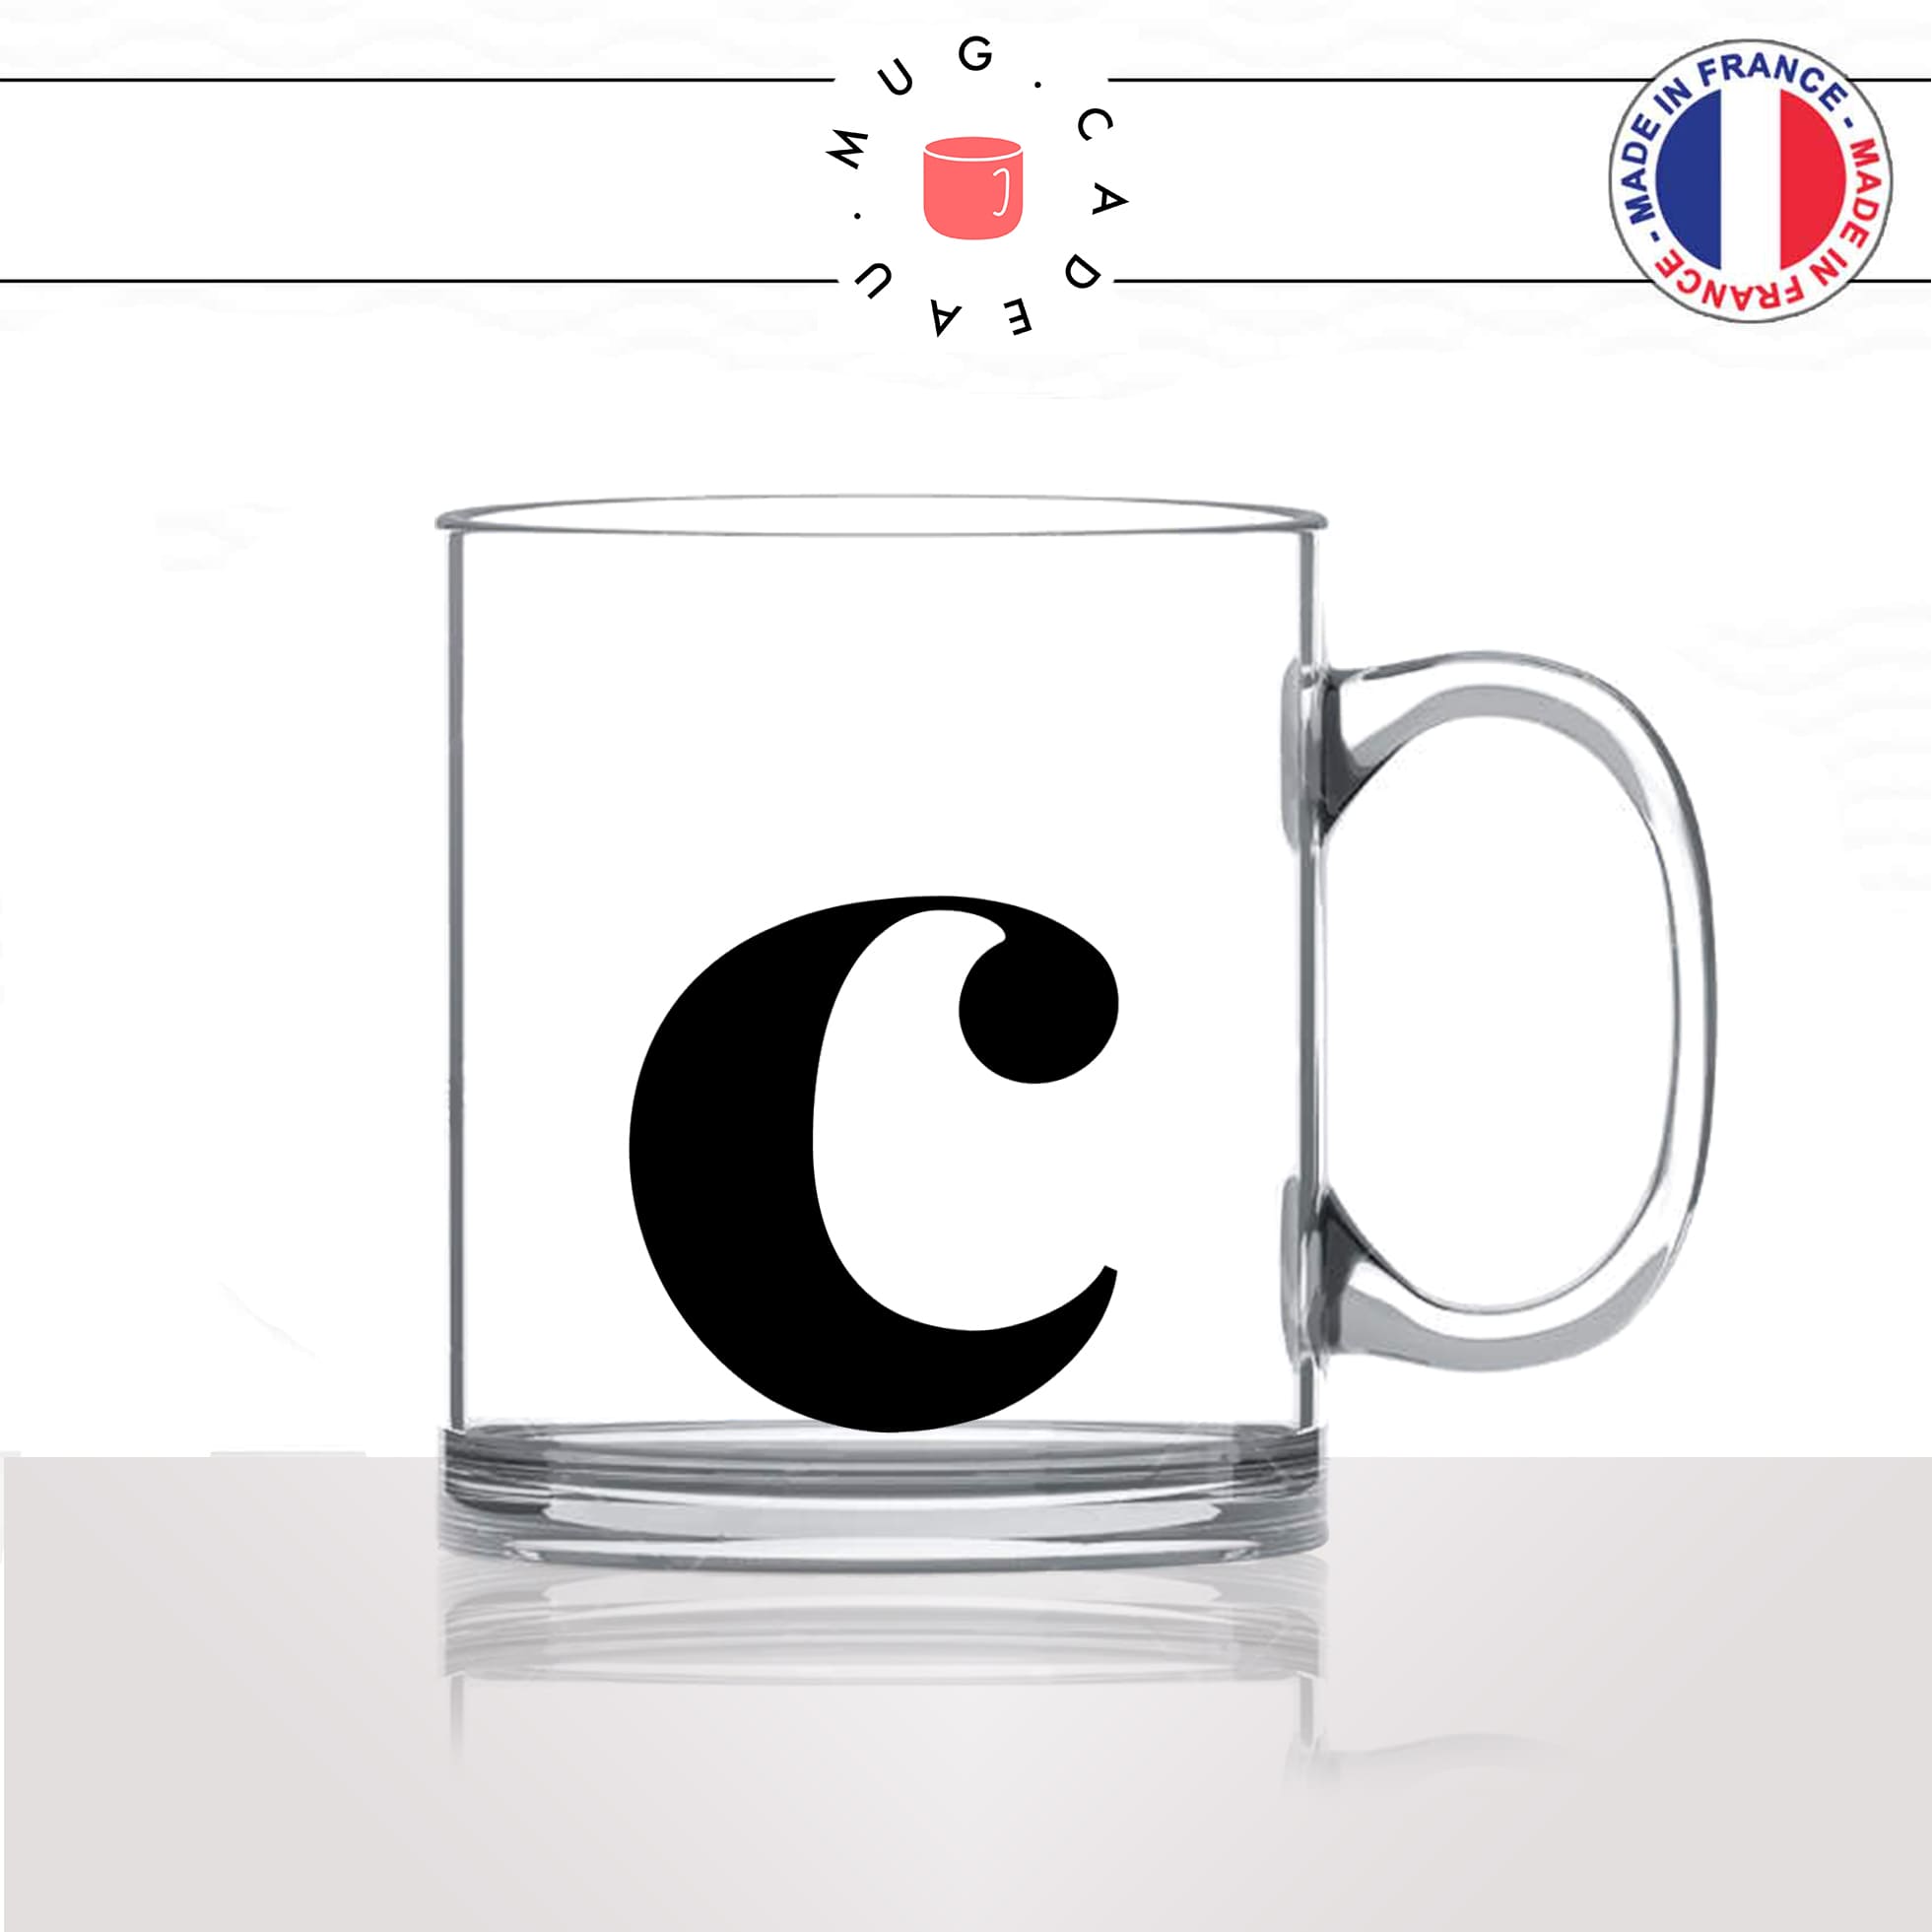 mug-tasse-en-verre-transparent-glass-initiale-C-corinne-clara-claire-cleo-chloé-camille-lettre-collegue-original-idée-cadeau-fun-cool-café-thé2